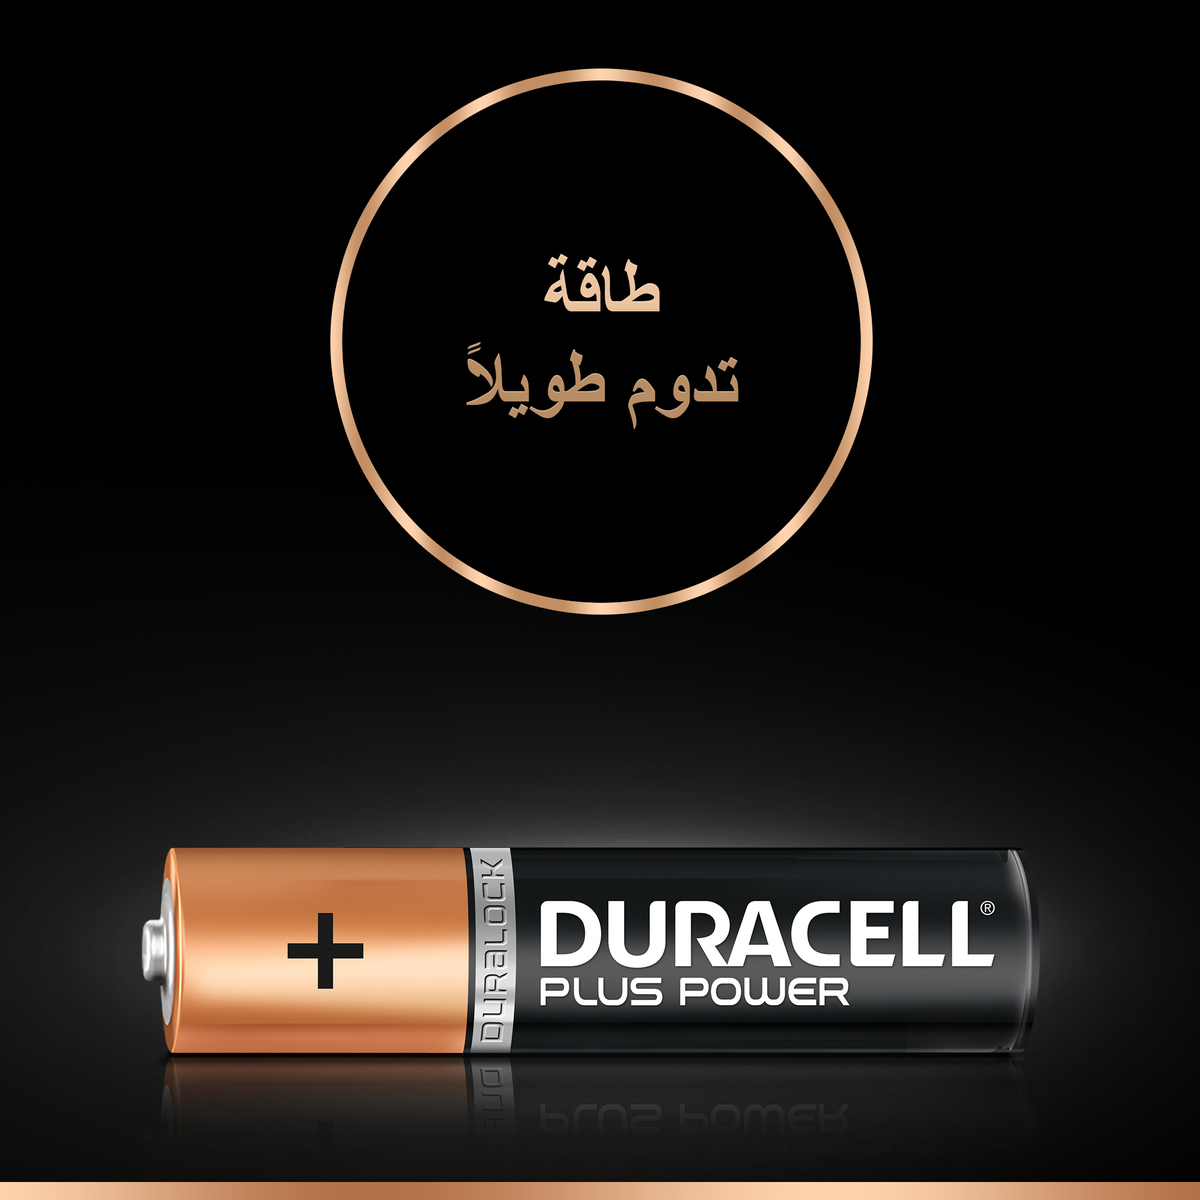 Duracell Plus Power Type AAA Alkaline Batteries 4pcs